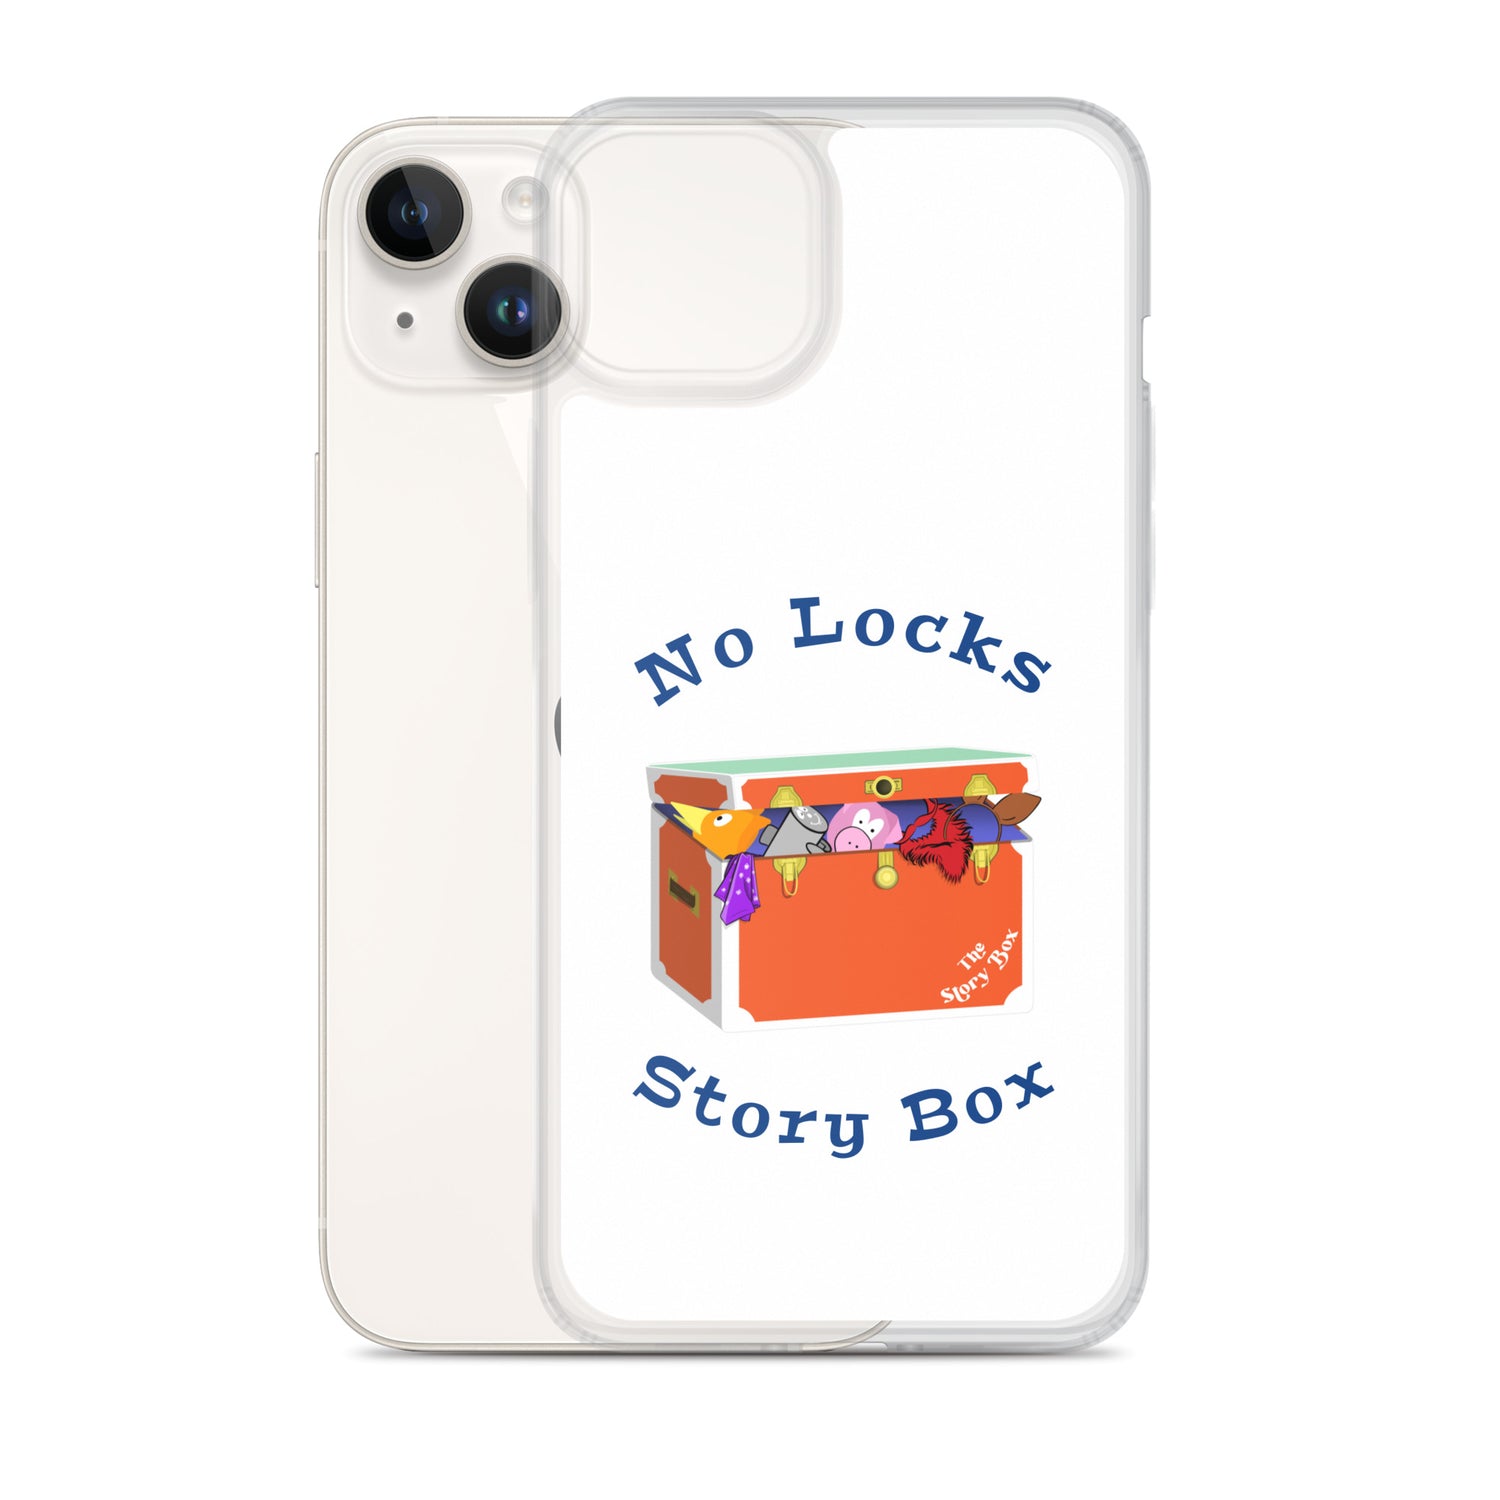 No Locks Story Box iPhone Cover